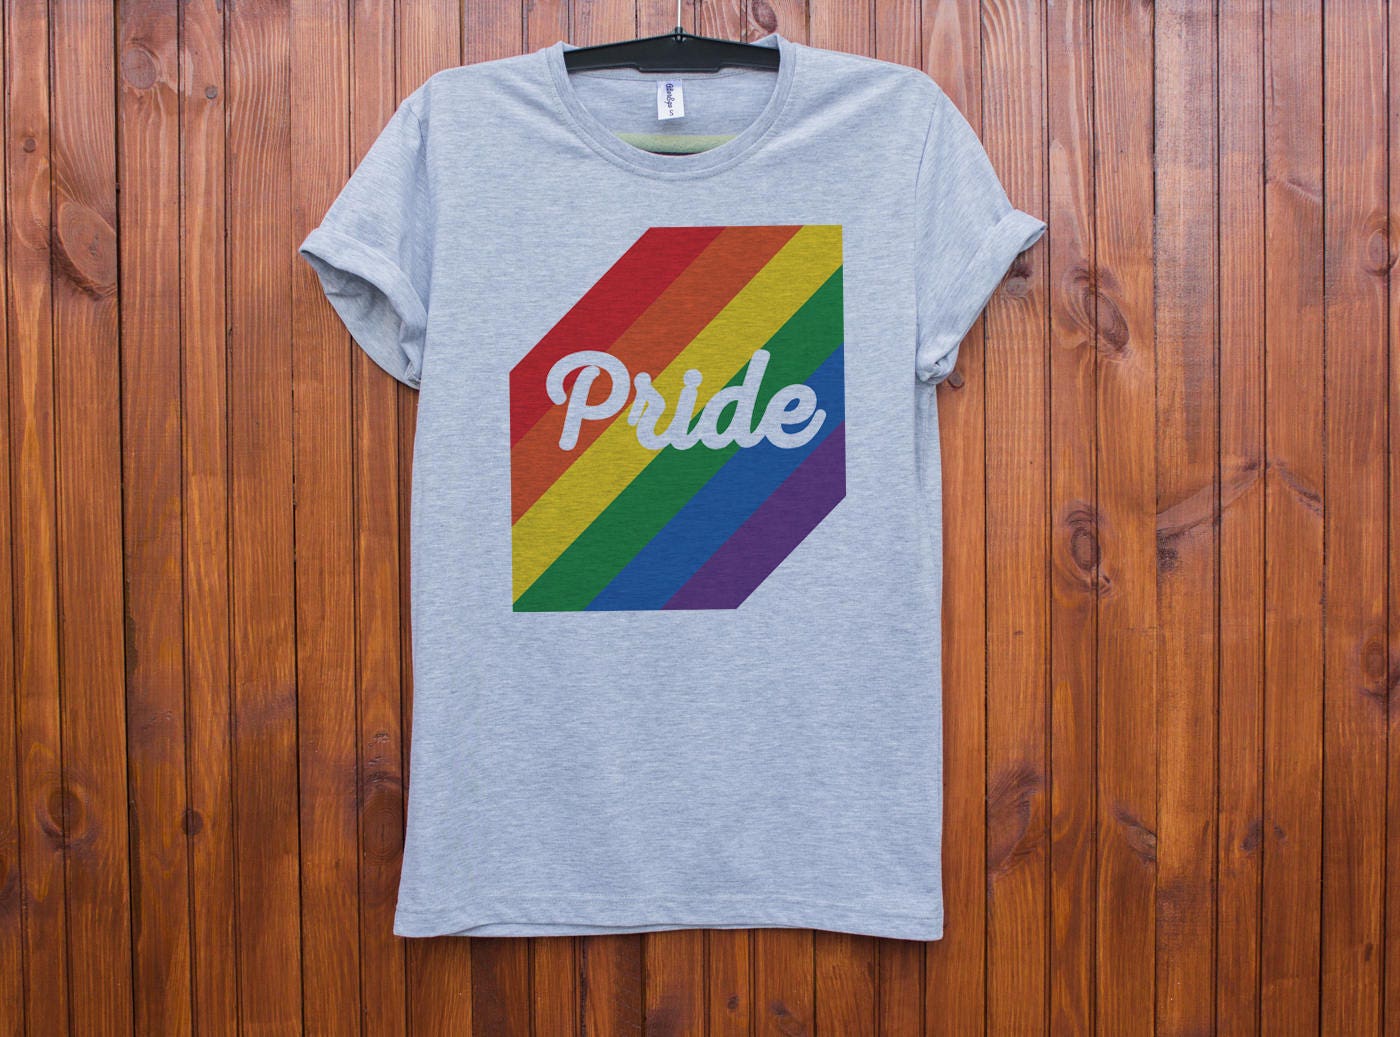 gay pride shirts under $5